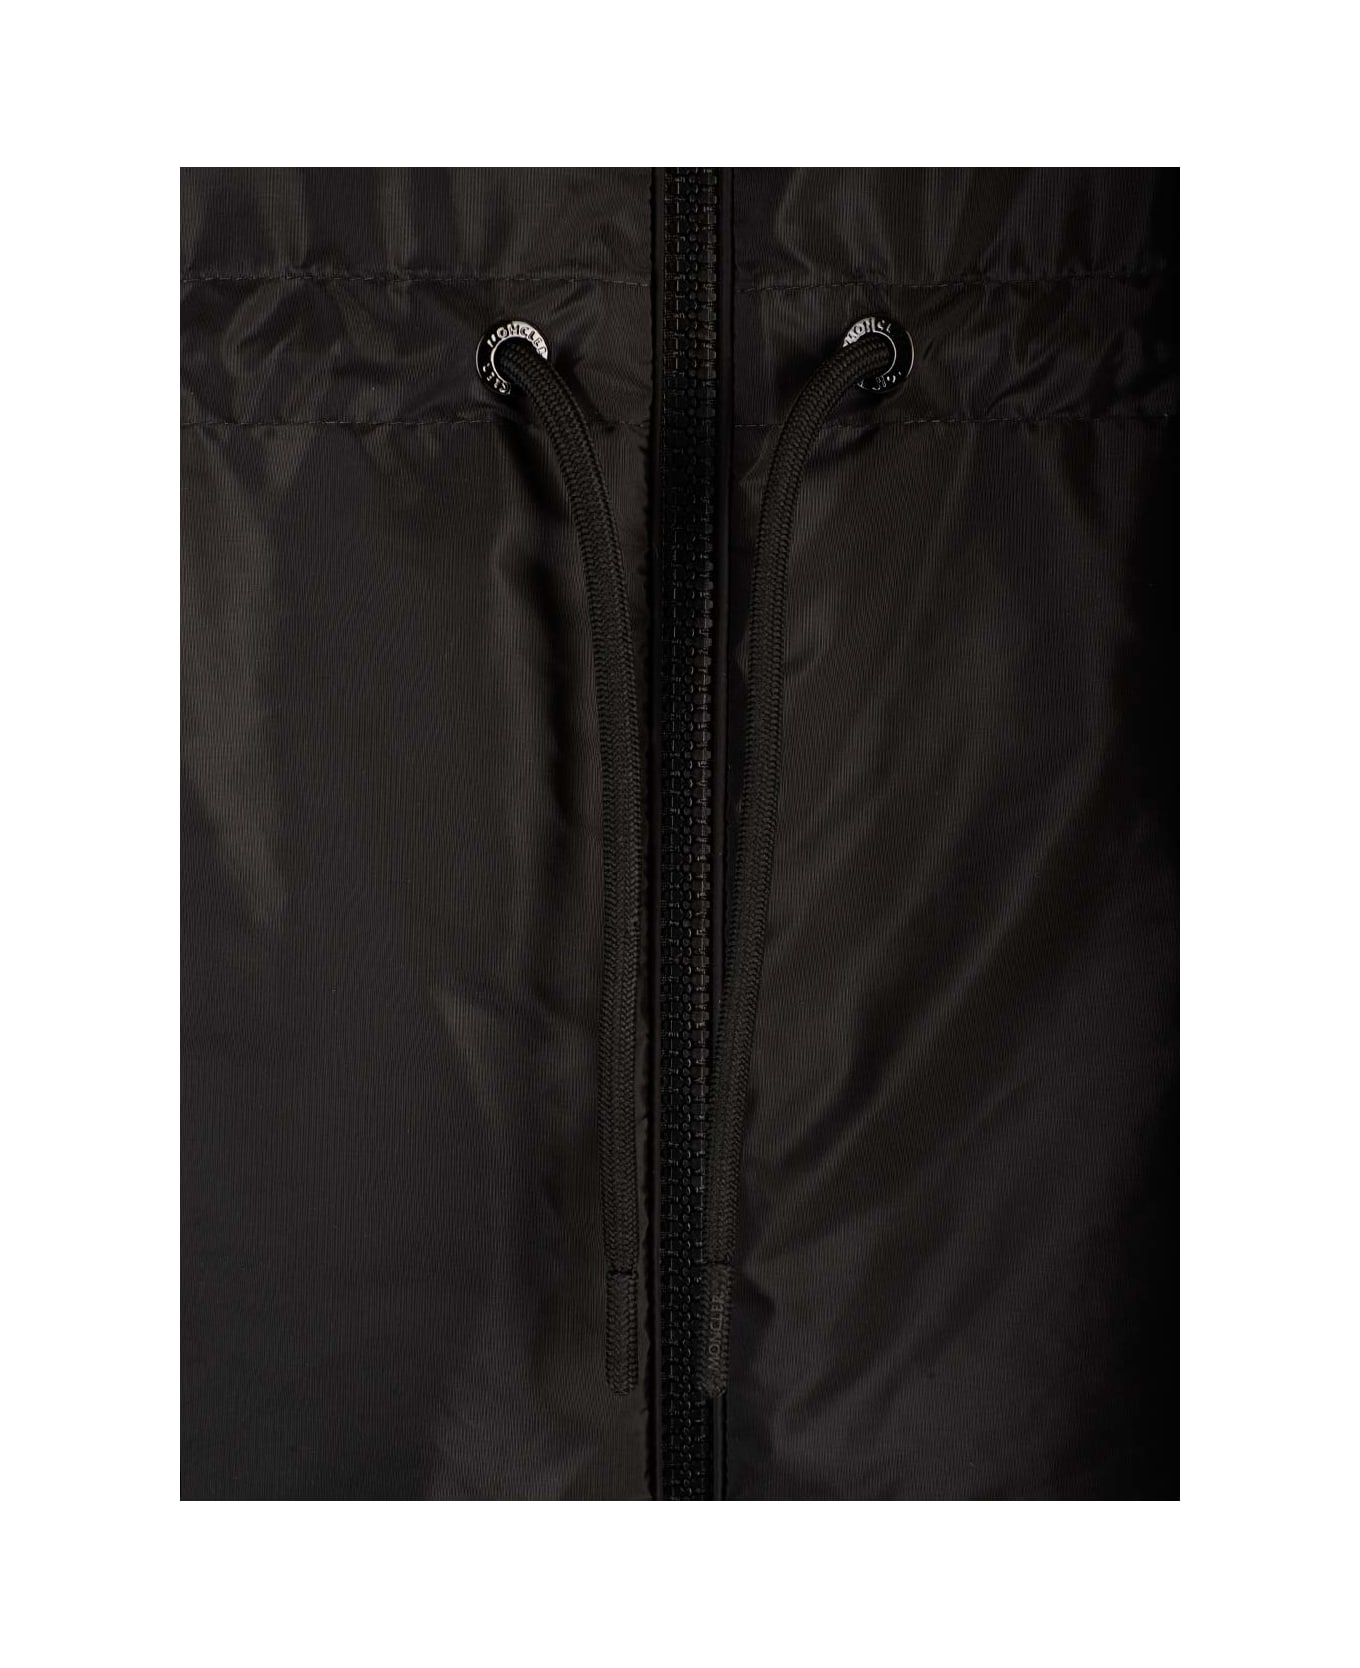 Moncler 'filira' Jacket With Hood - Black